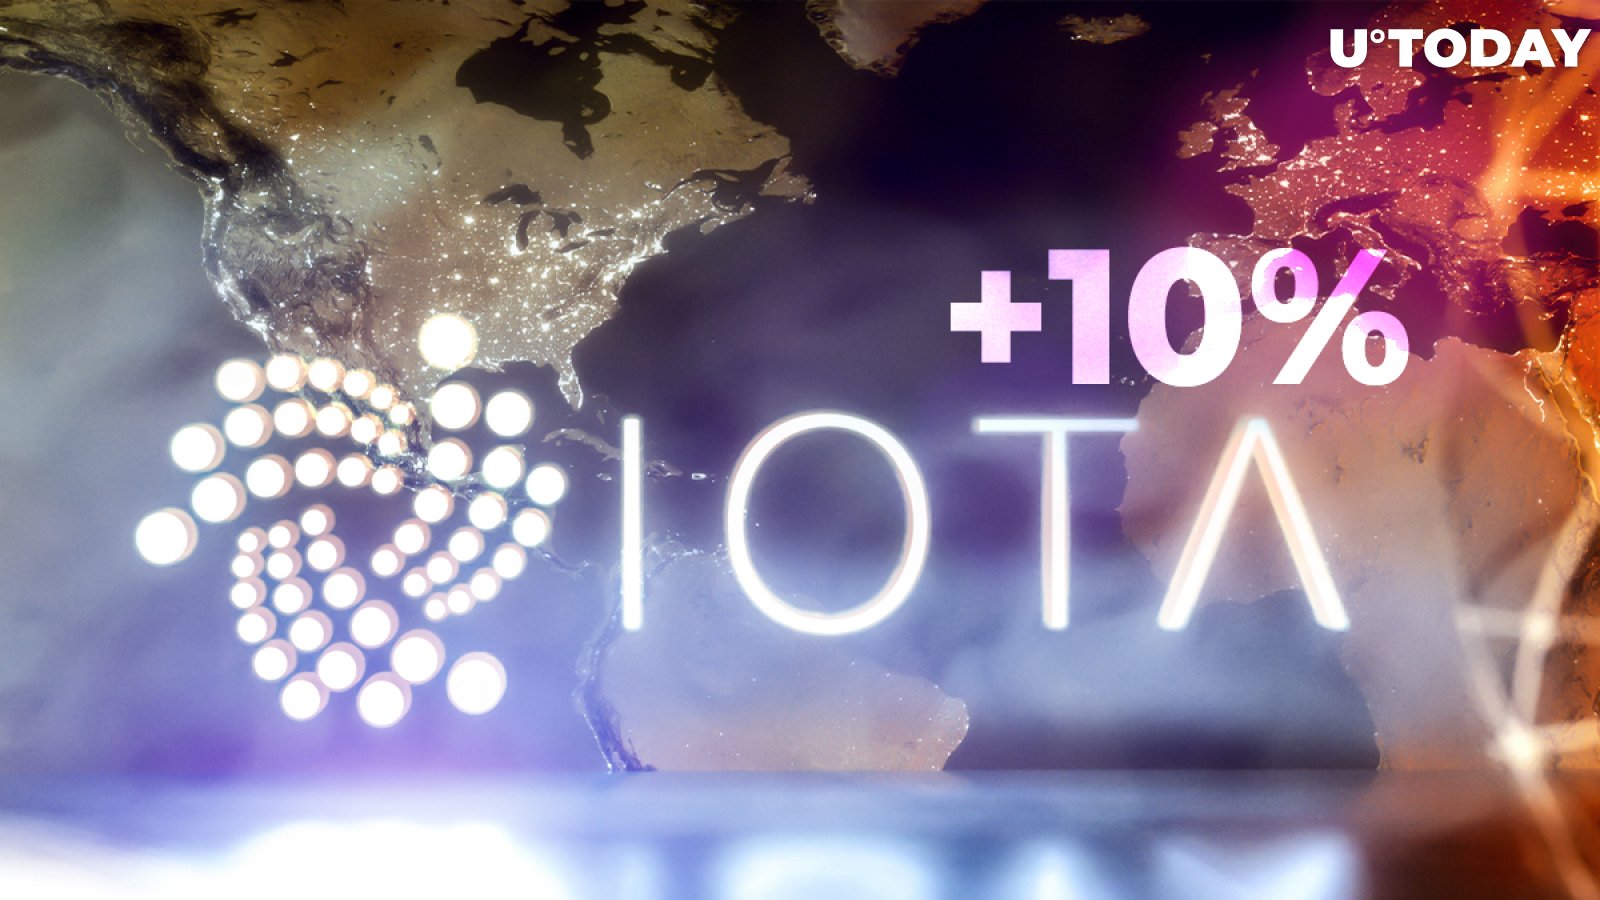 IOTA Rises 10% as Digital Assets Framework to Launch Soon